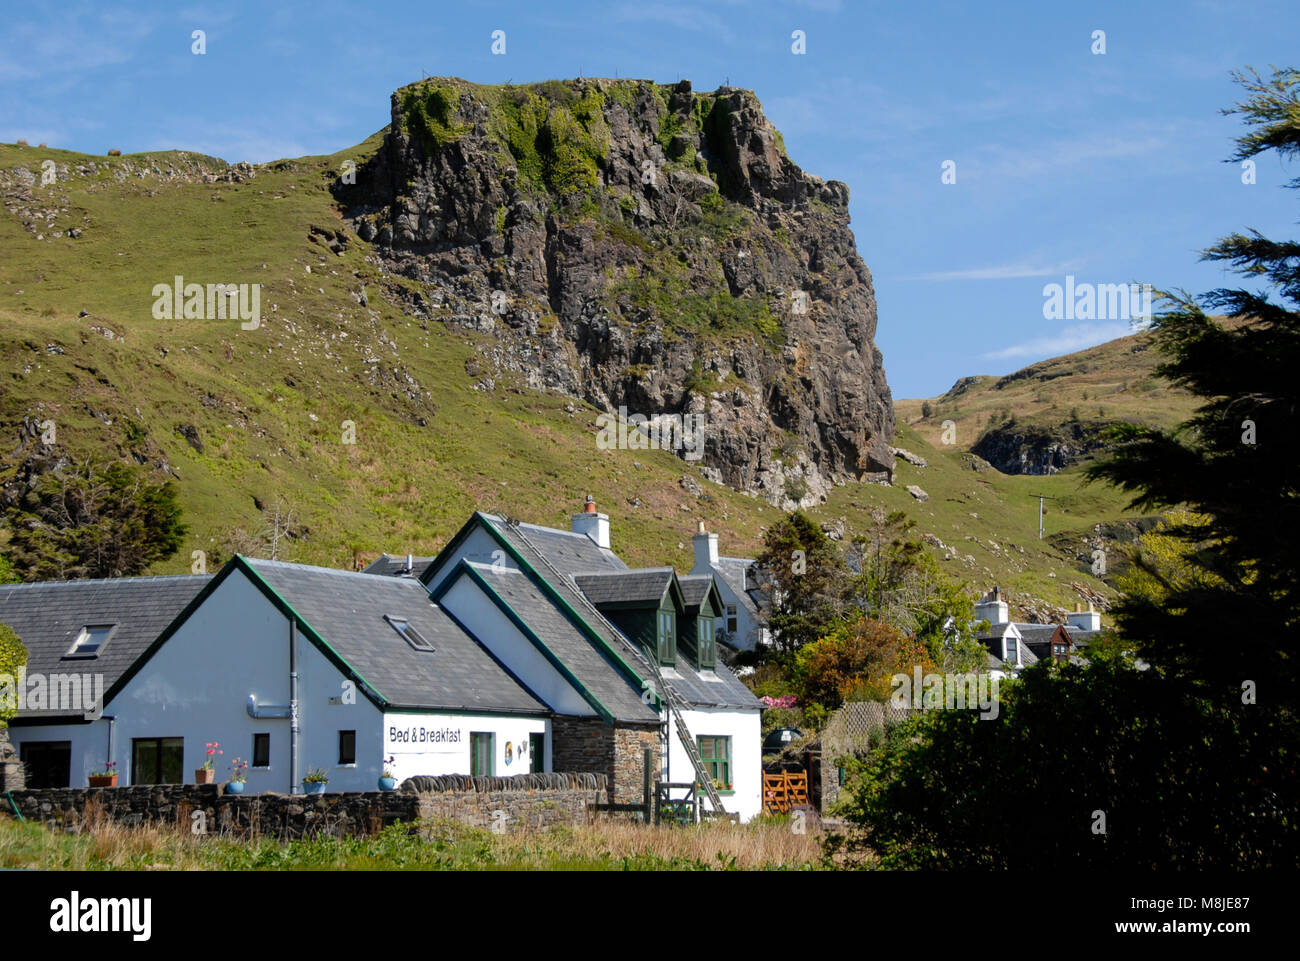 Bed & Breakfast establishment beneath large rocky outcrop on mountainside, Ellenabeich, Seil island, Scotland Stock Photo